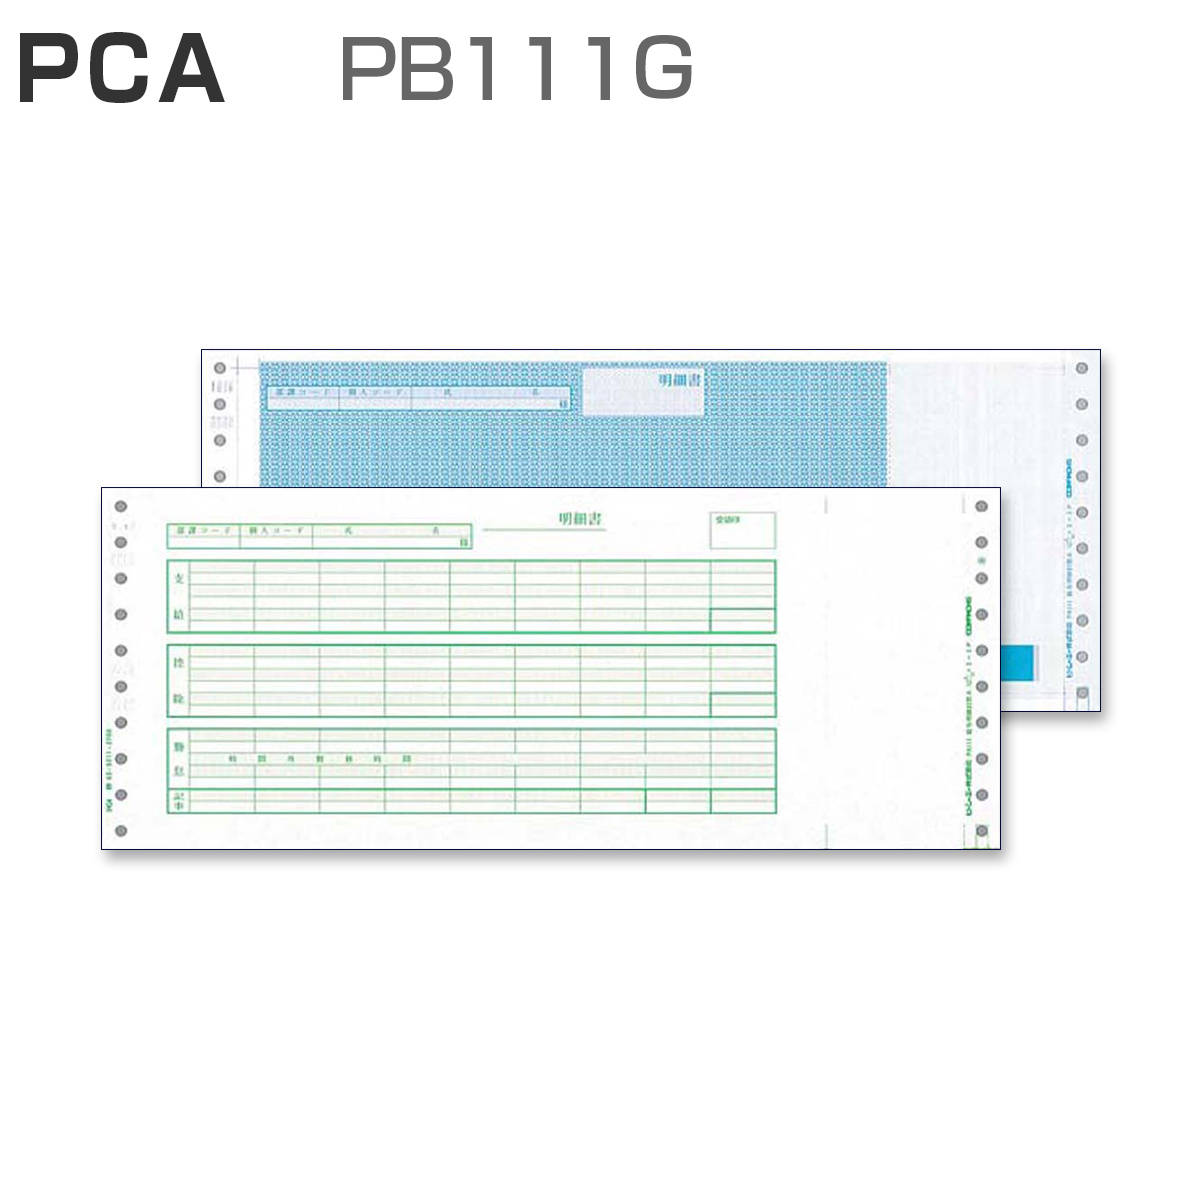 PCA PB111G 給与明細封筒Ａ 【口開き式】 (1,000枚)